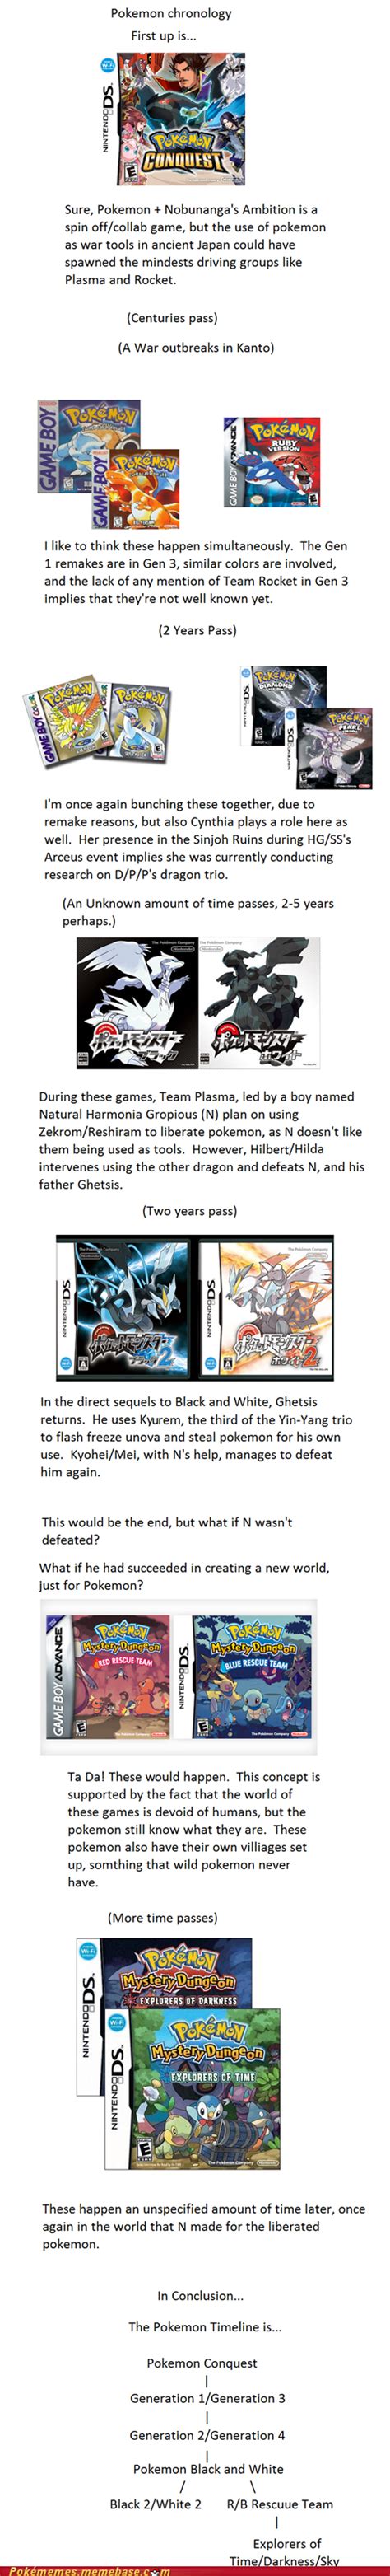 Pokemon Timeline